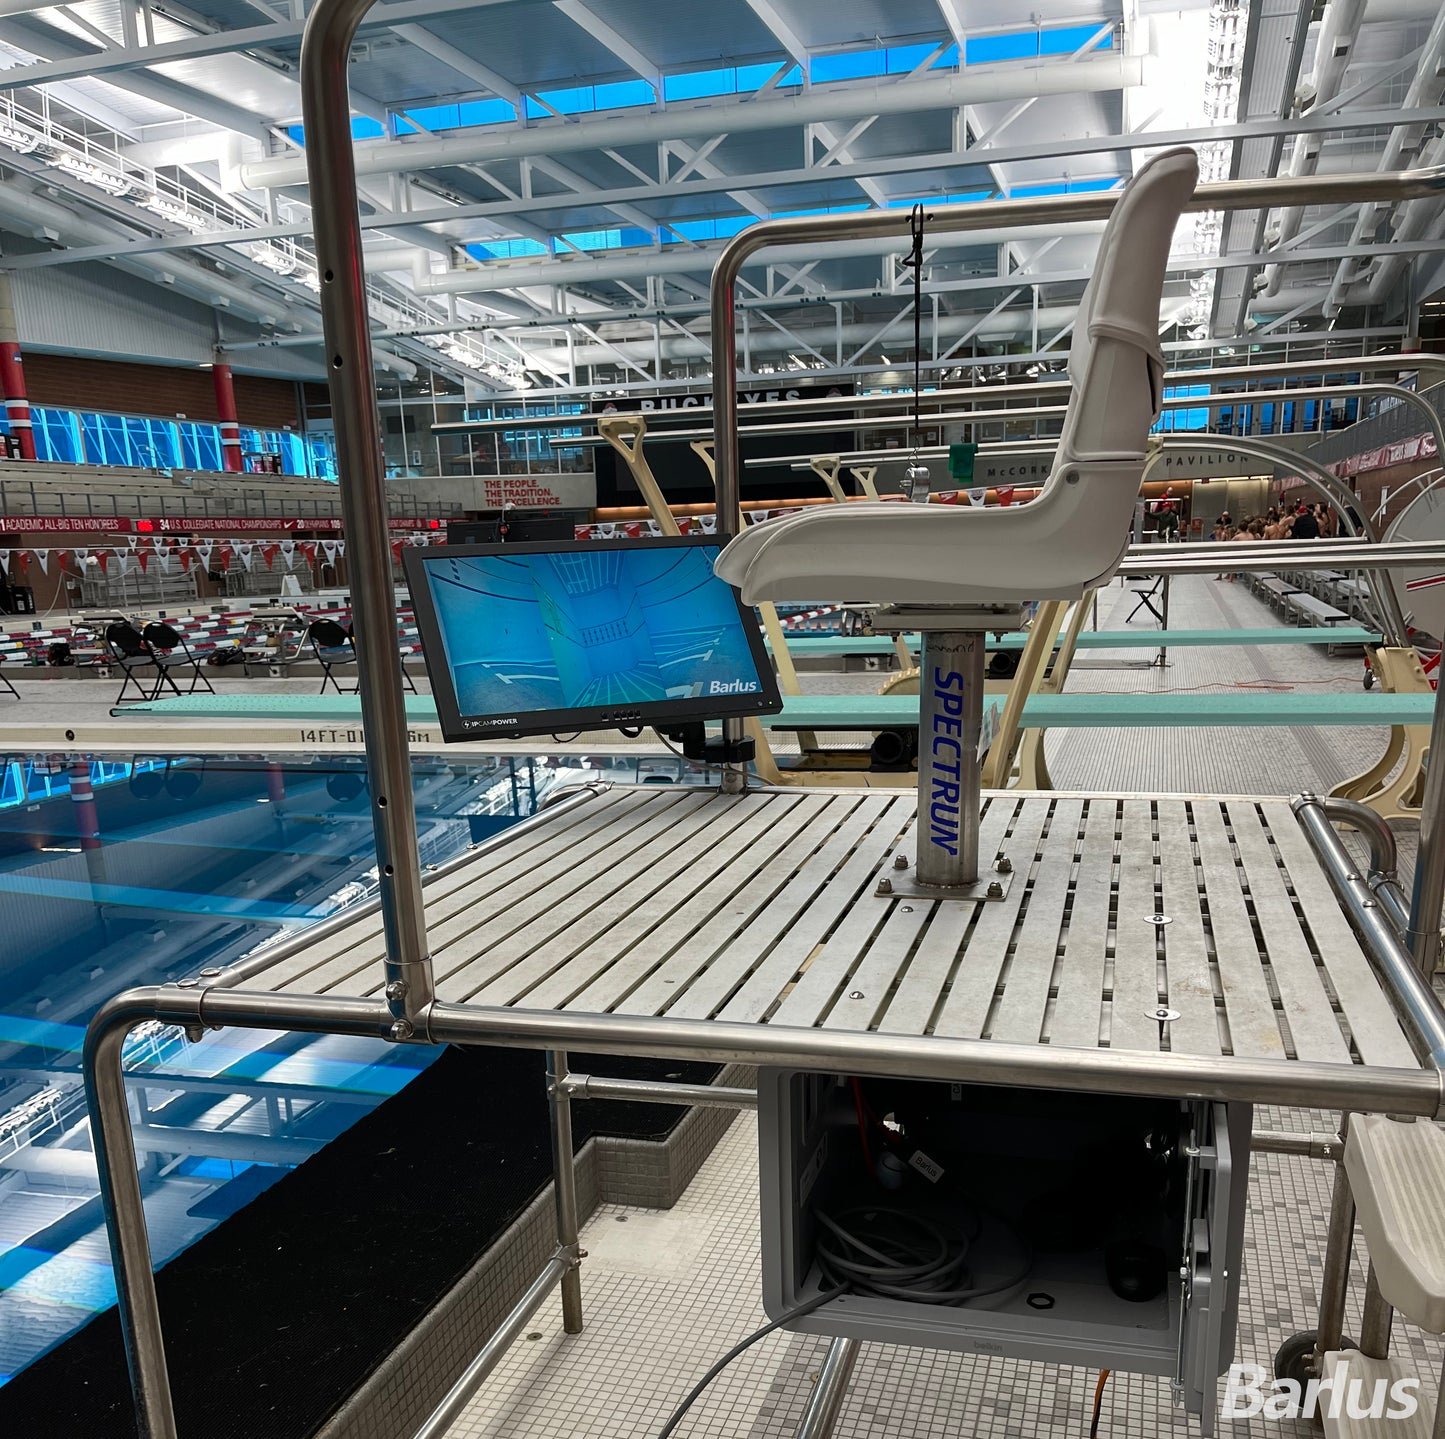 Swimming Pool 180° 3-in-1 Underwater Camera